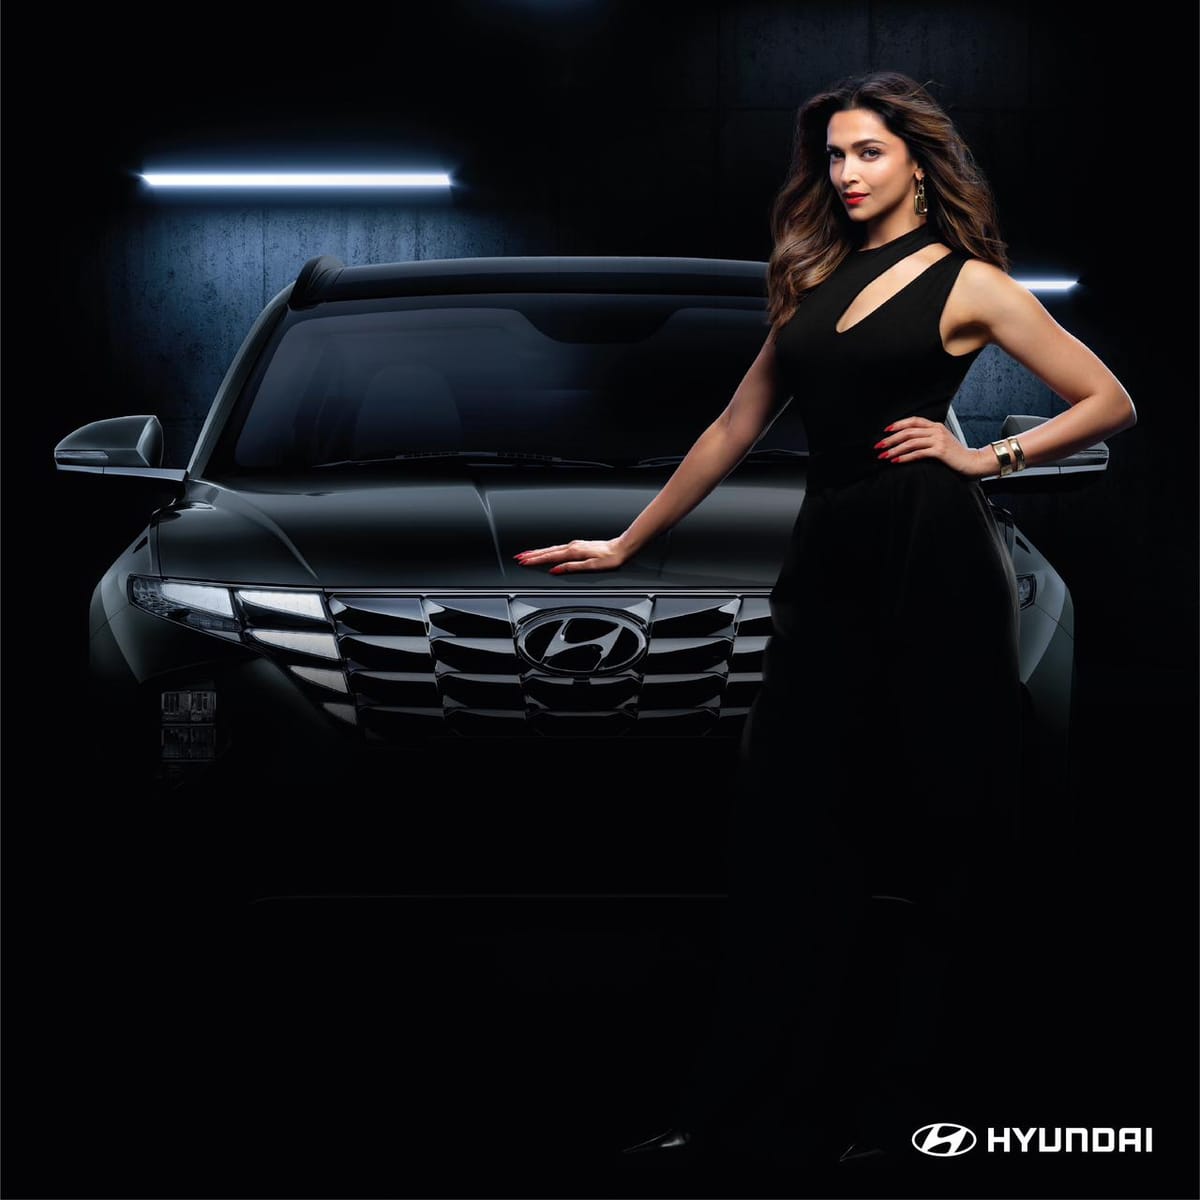 Hyundai Motor India Ltd. welcomes Deepika Padukone to the Hyundai family as its Brand Ambassador